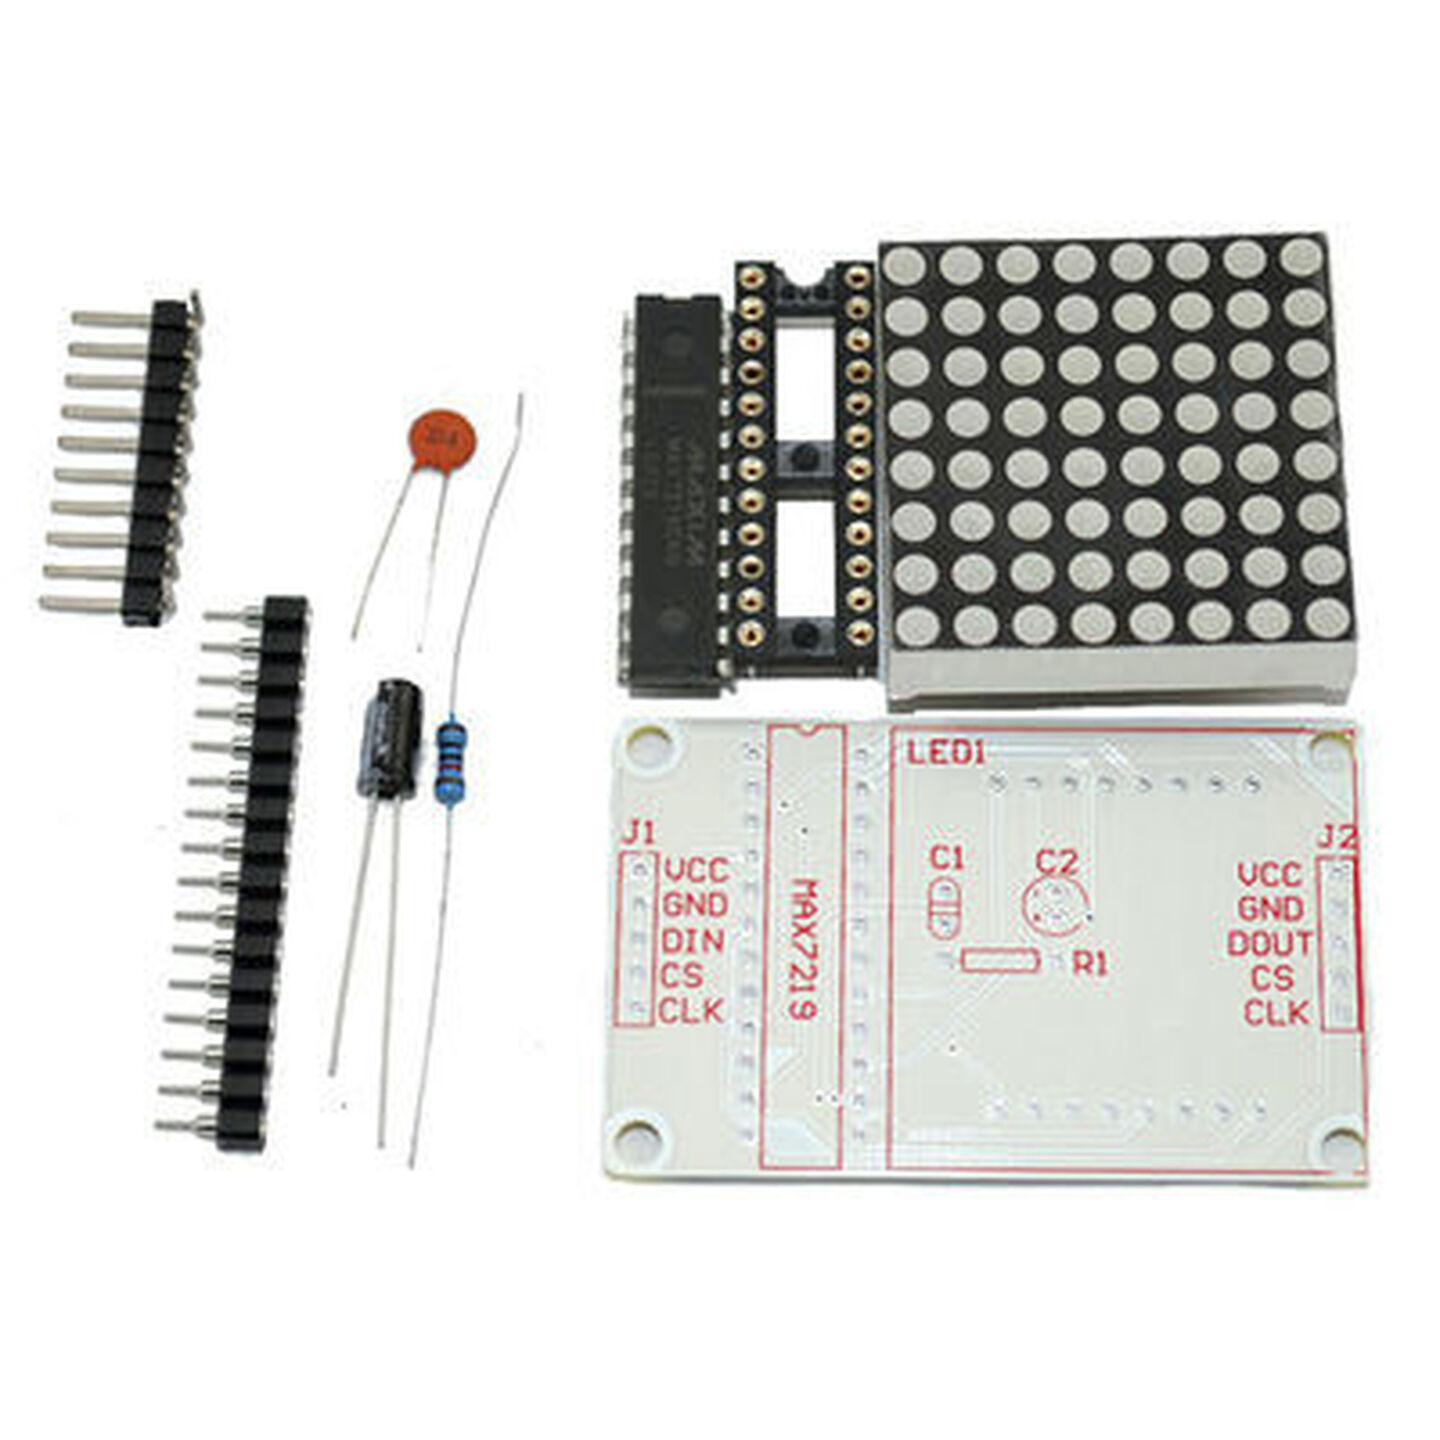 LED Matrix Kit for Arduino